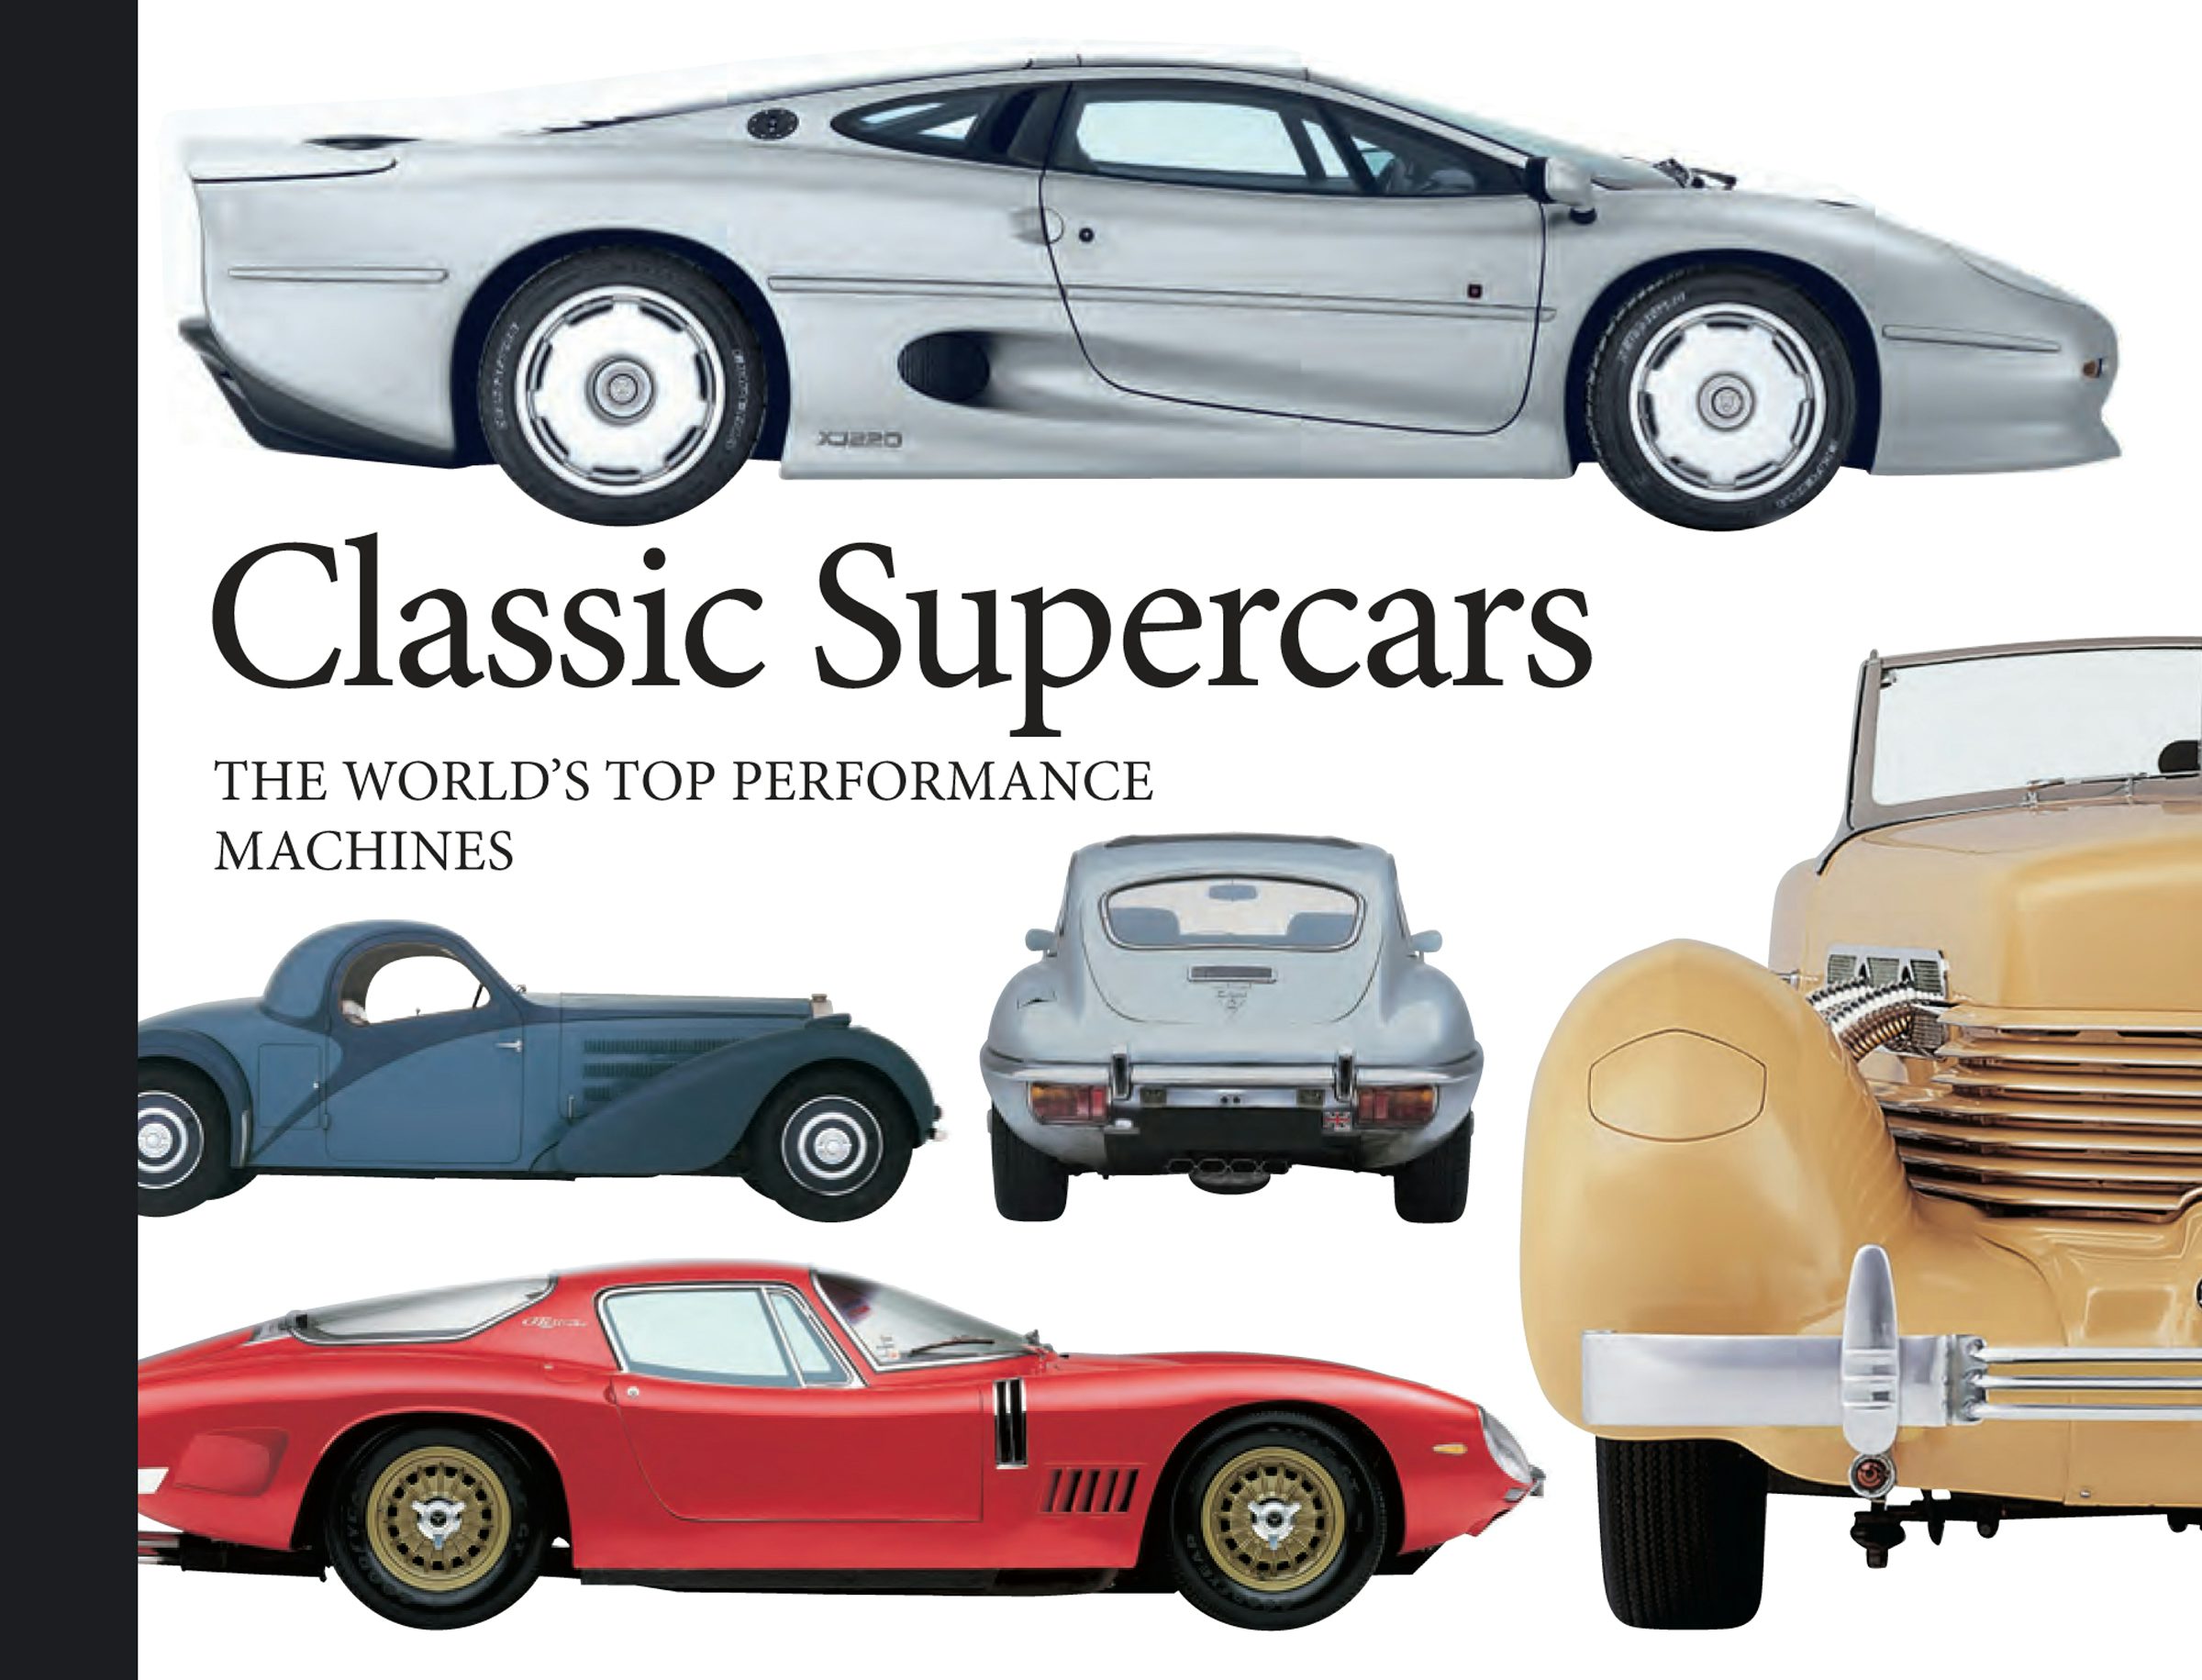 Classic Supercars by Richard Gunn: 9781838863302 - Union Square & Co.